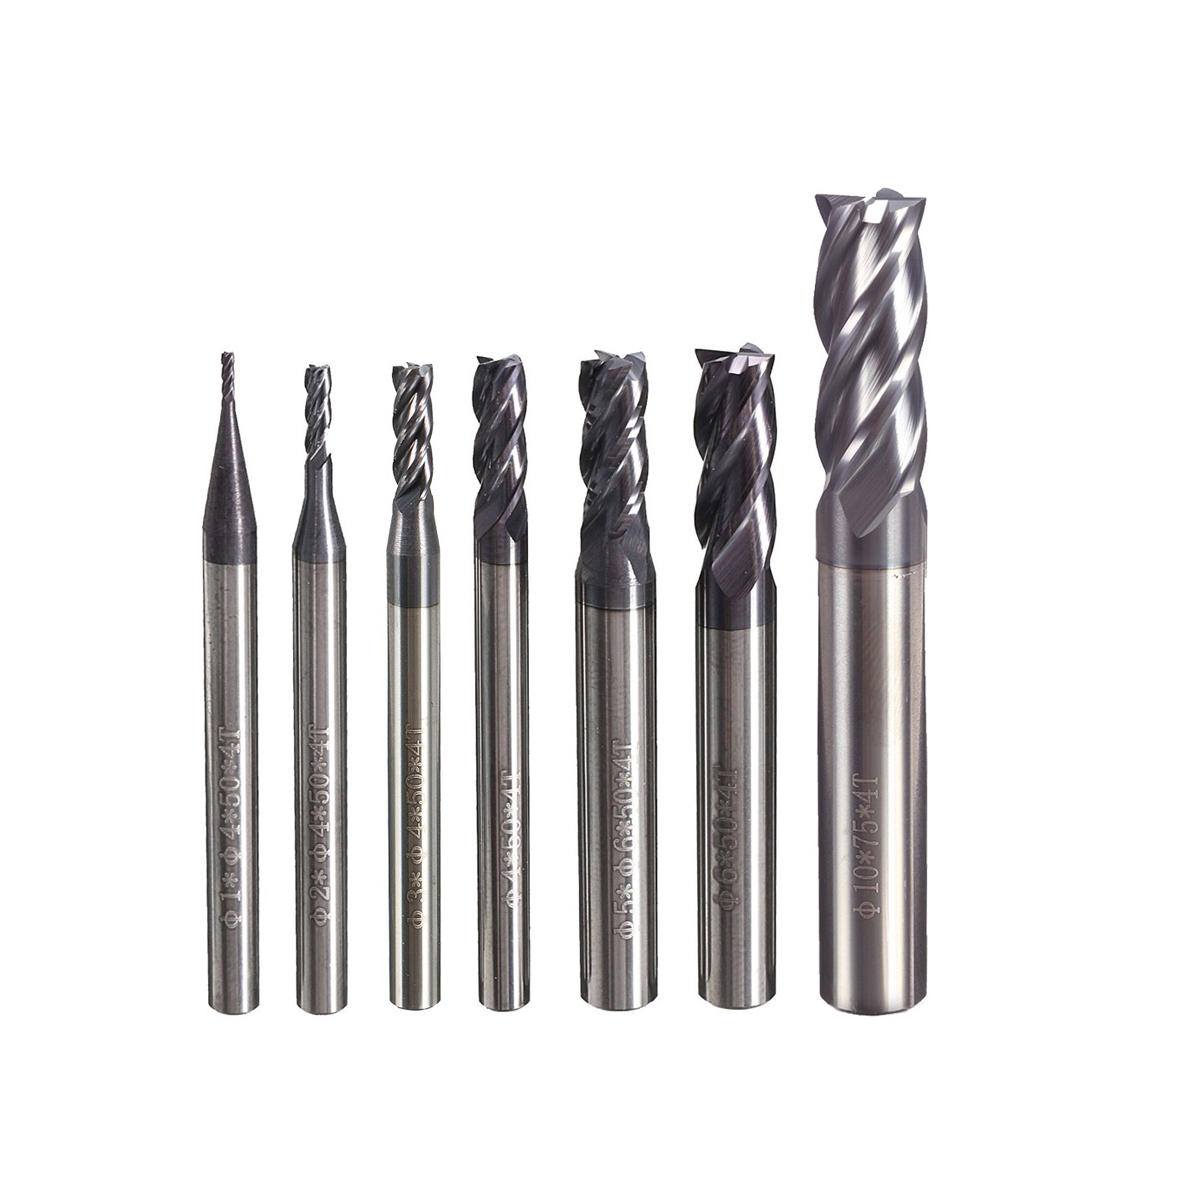 7pcs 1-10mm 4 Flutes End Mill Cutter Tungsten Carbide Milling Cutter CNC Tool